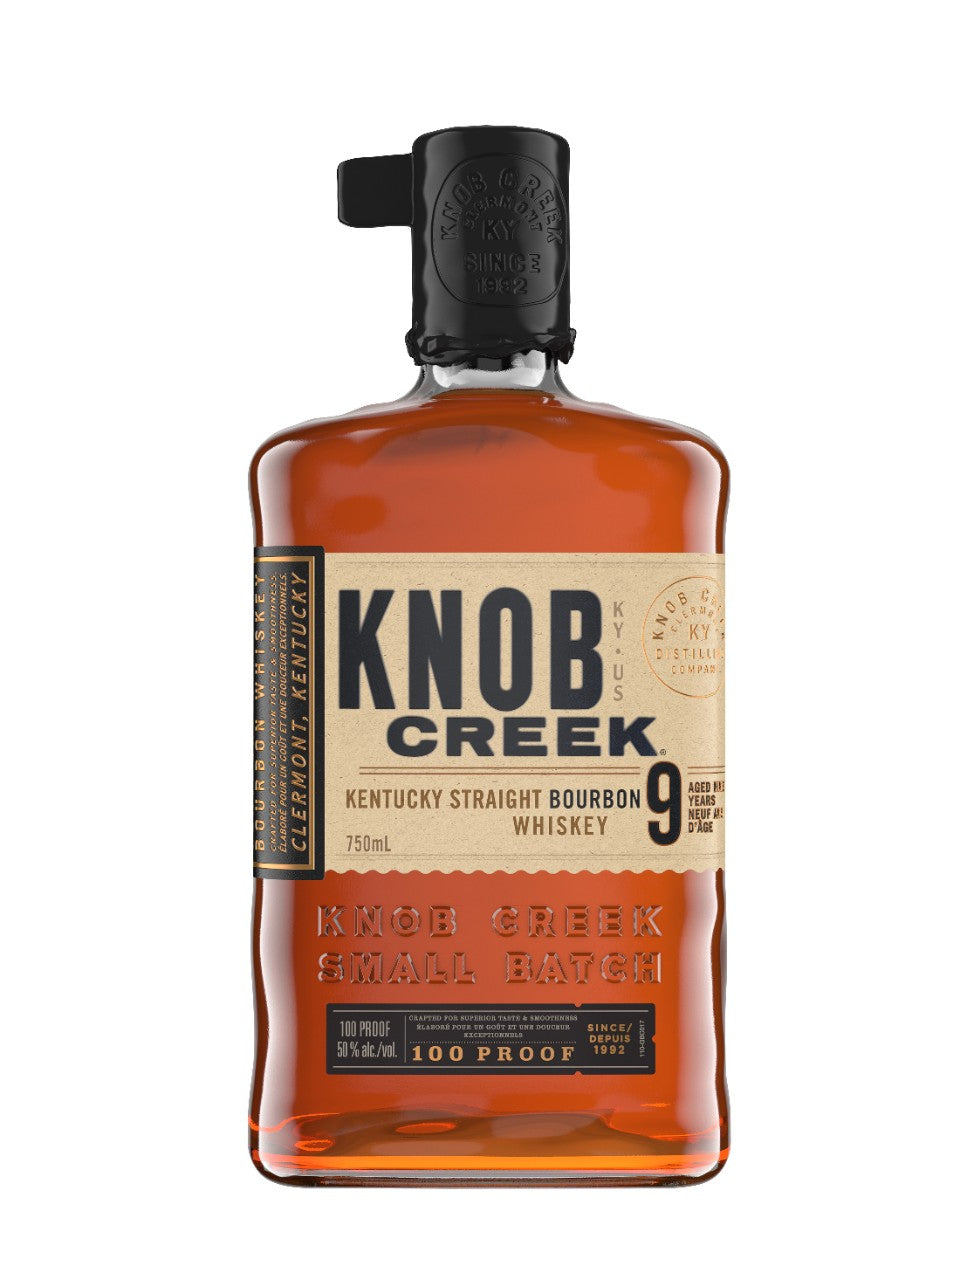 Knob Creek Bourbon 750 mL bottle